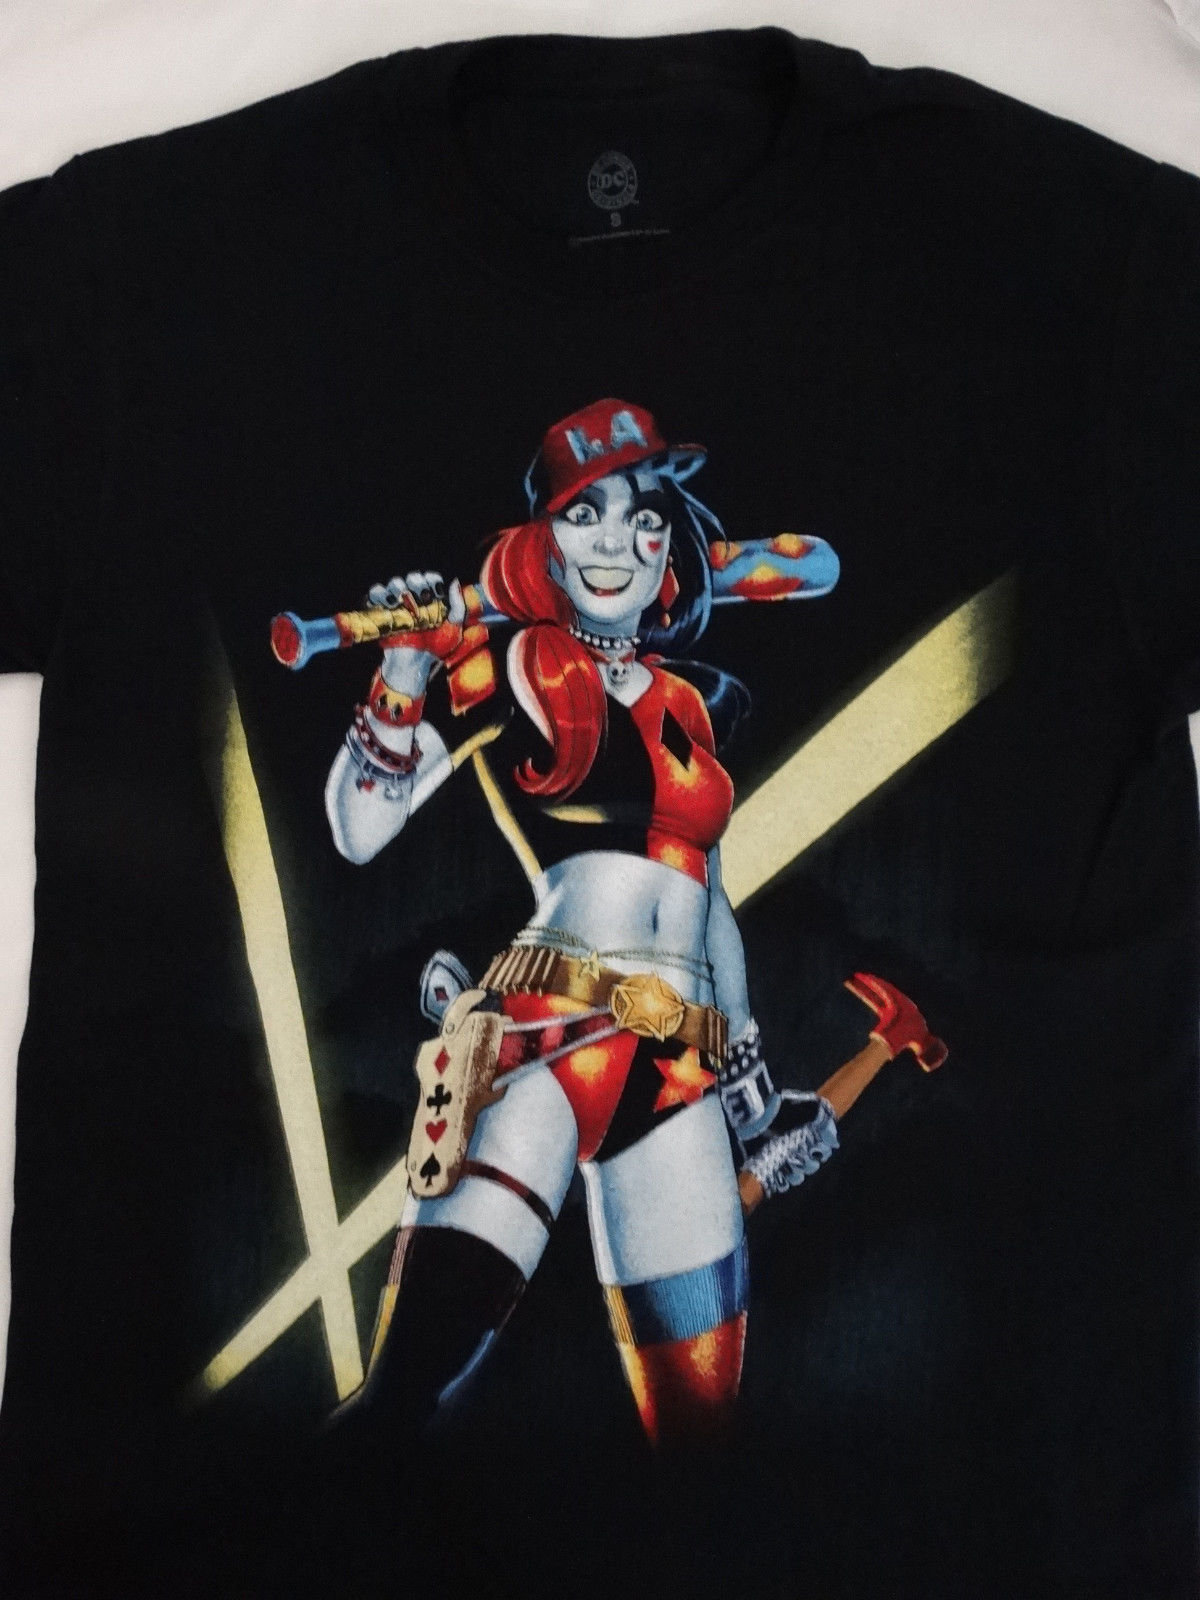 Harley Quinn Comic Batman Baseball Bat Dc Comics T-Shirt S Small - $3.00